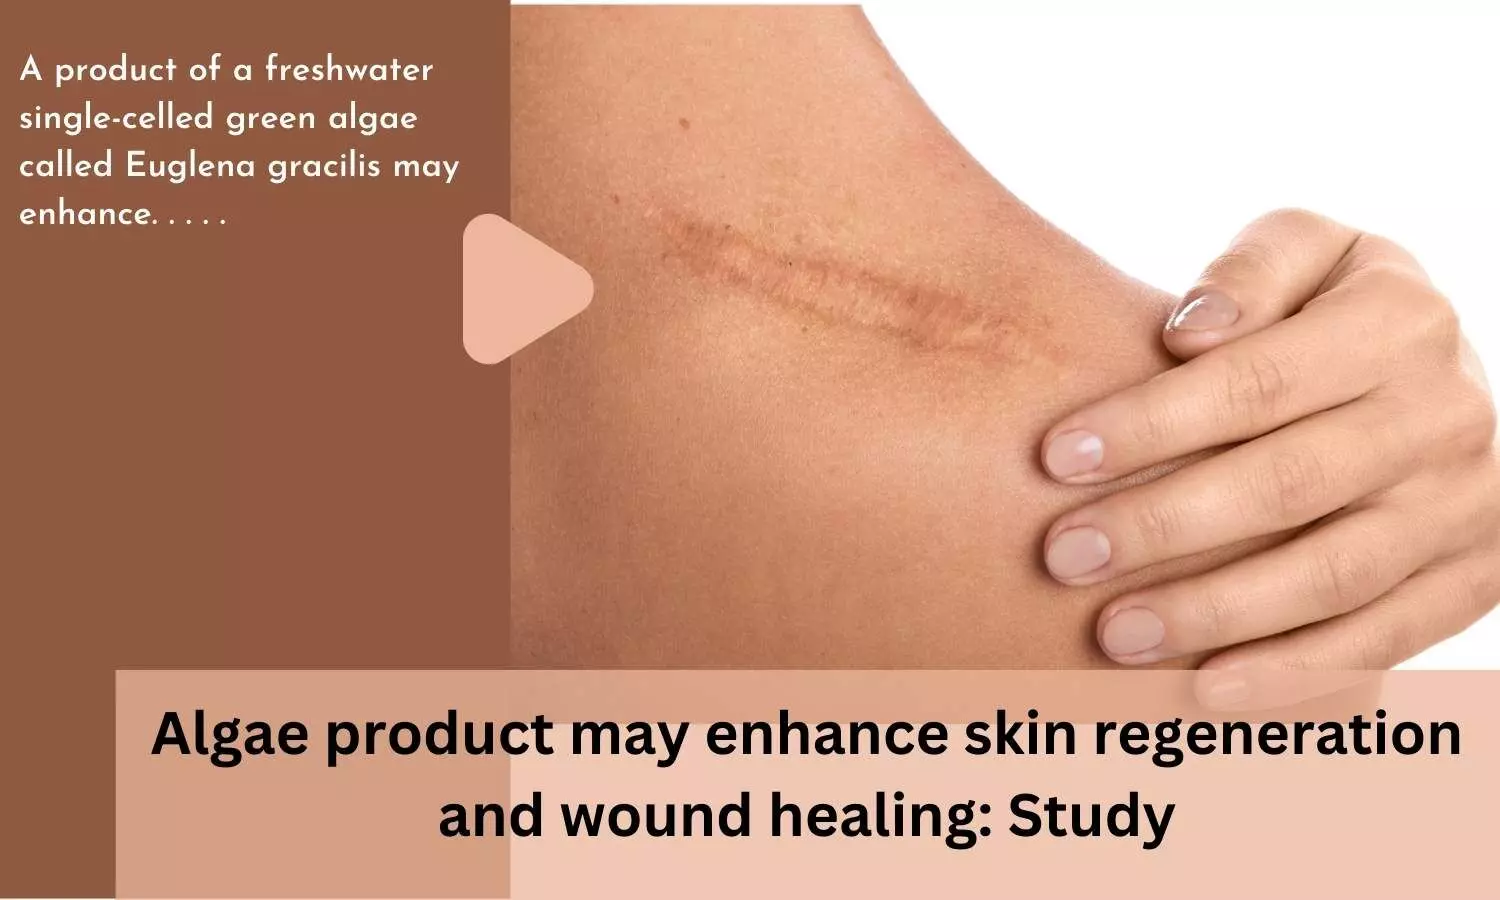 Algae product may enhance skin regeneration and wound healing: Study